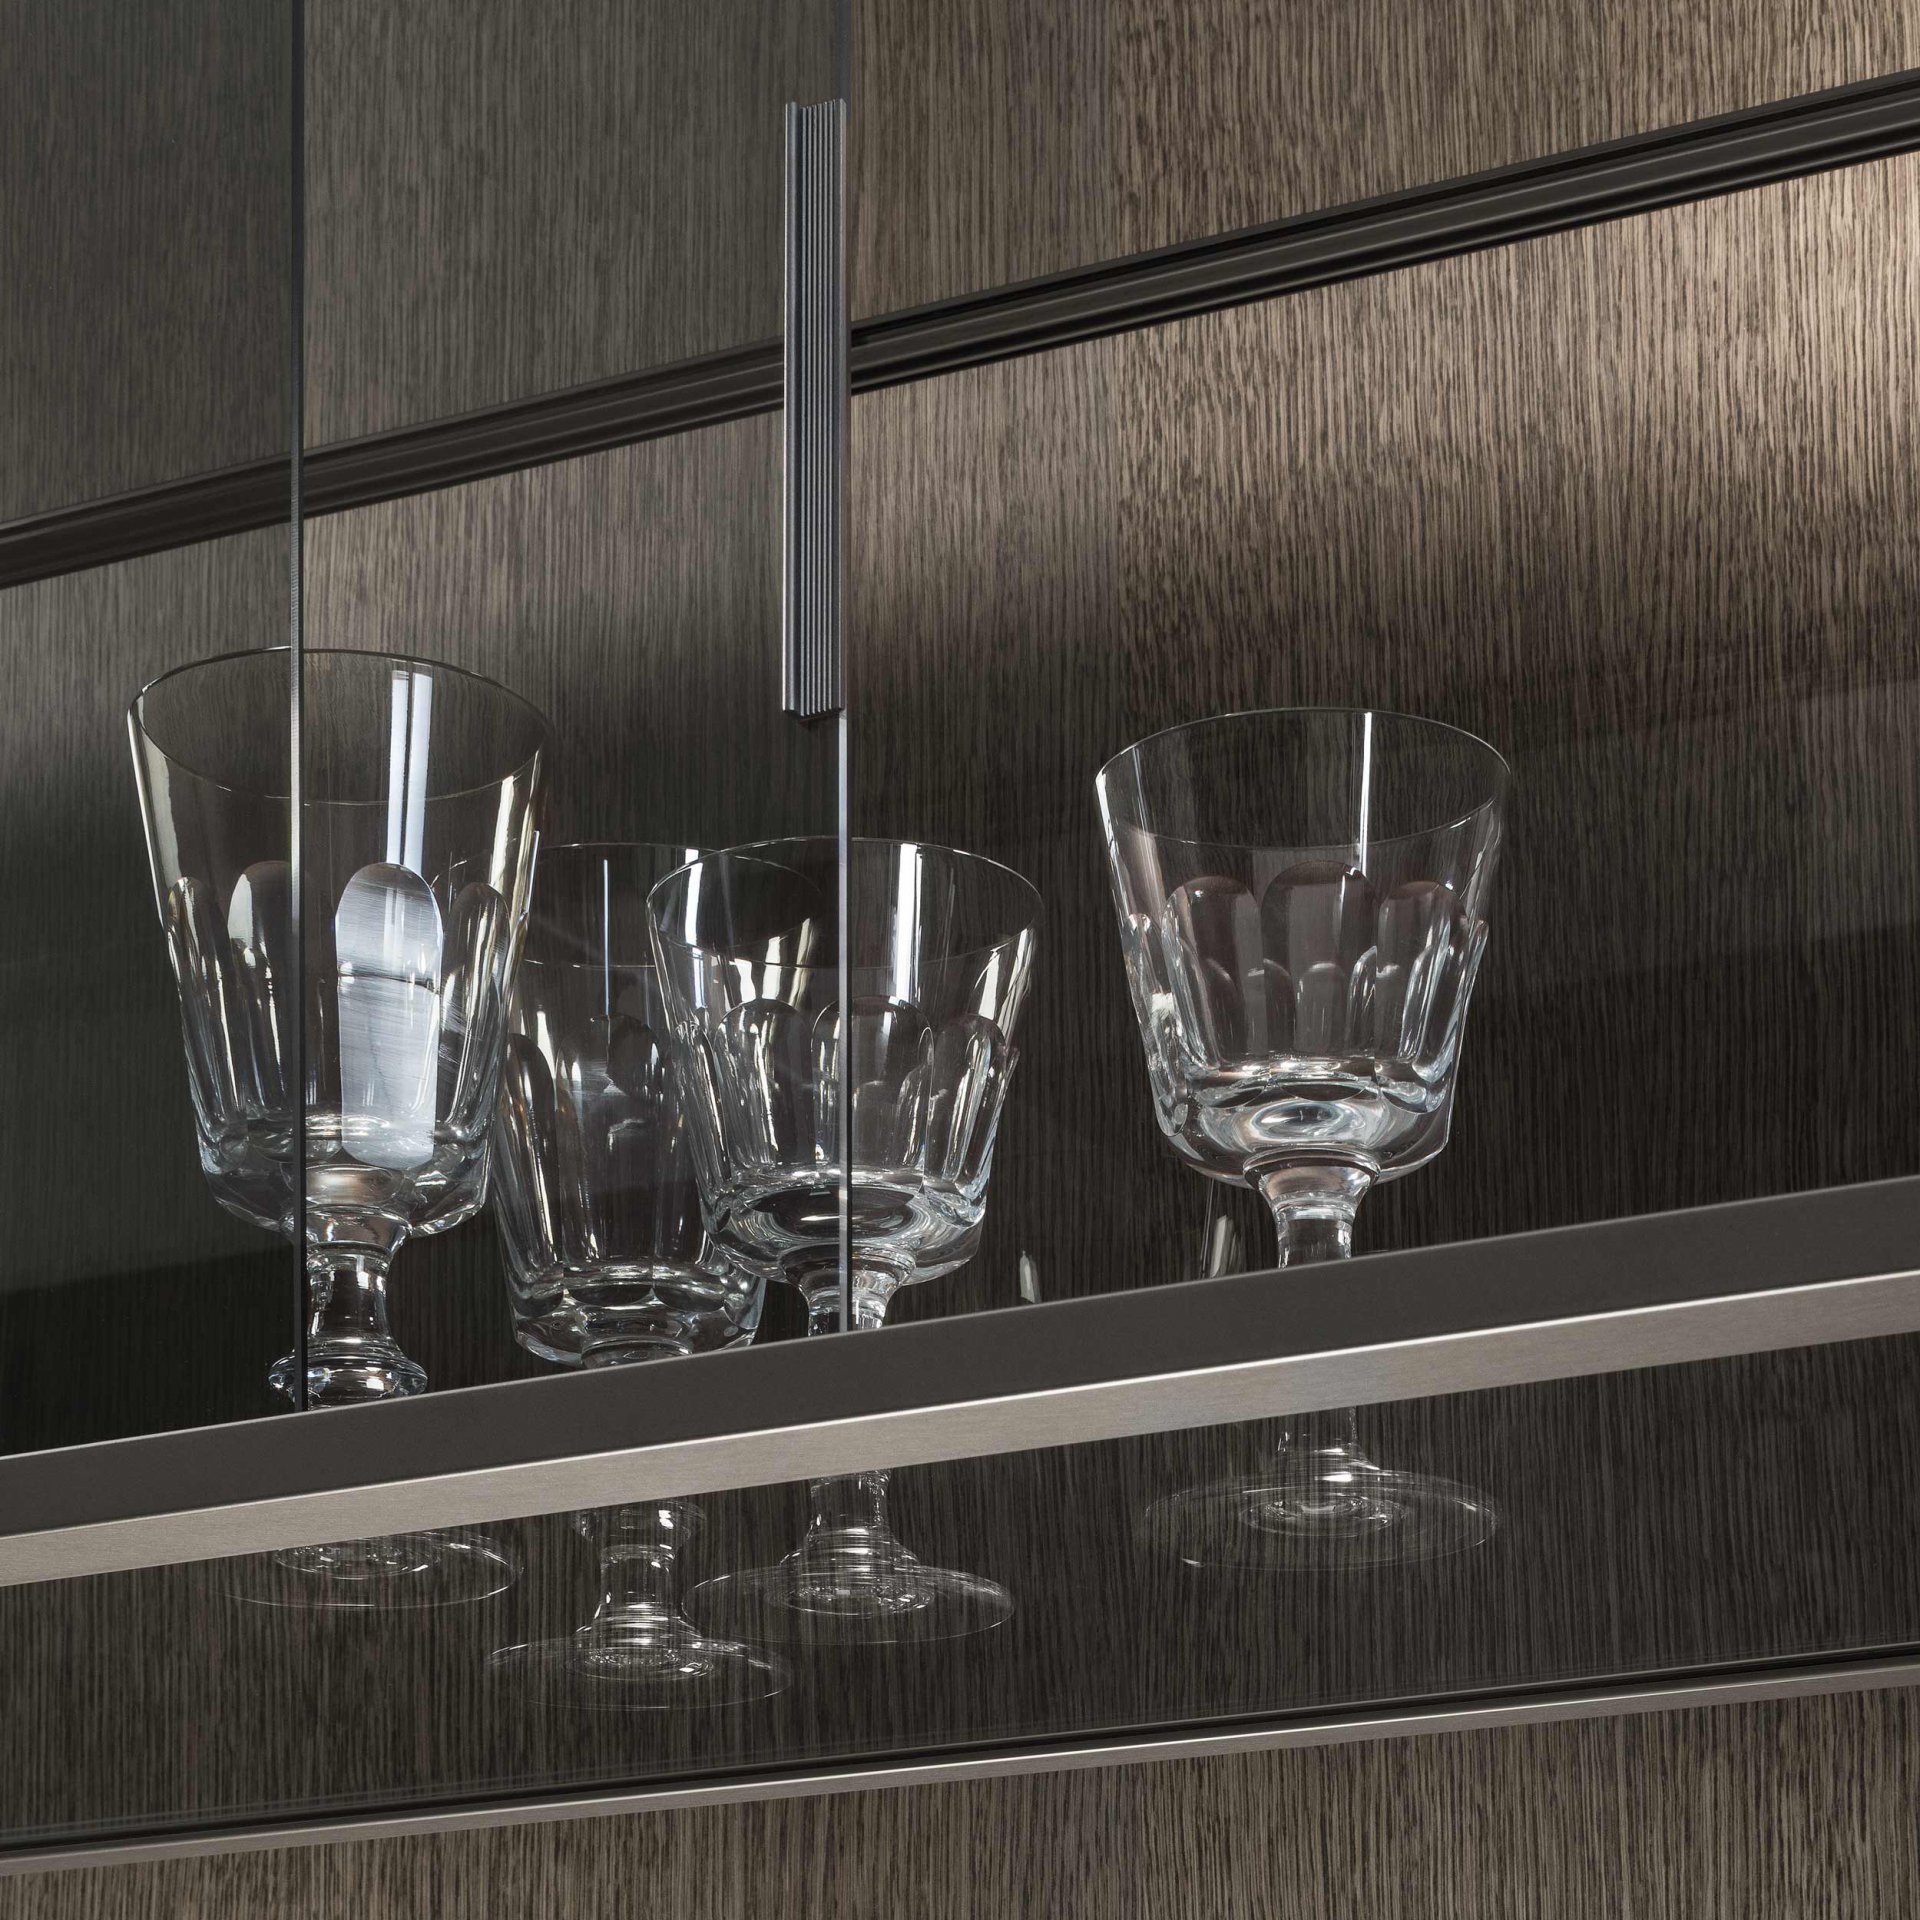 Zenit suspended showcase in tempered glass detail